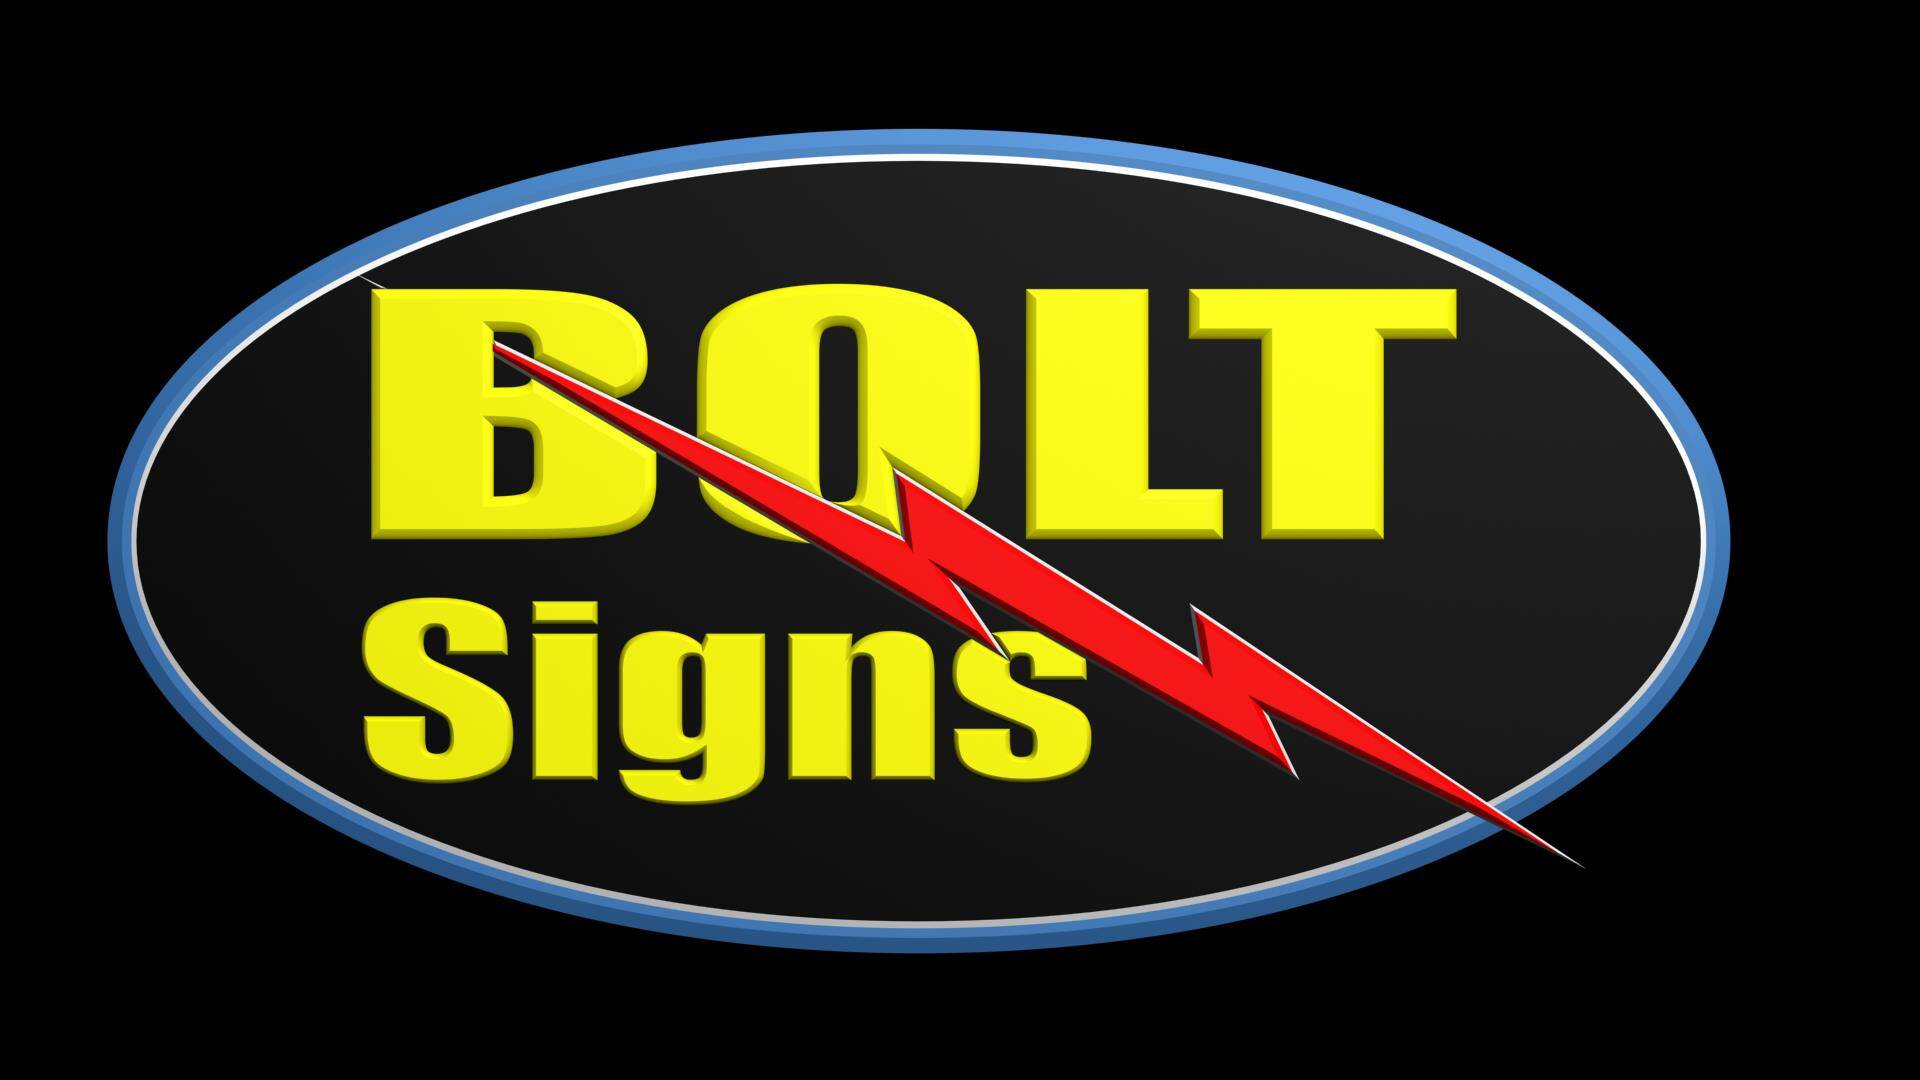 Bolt Signs